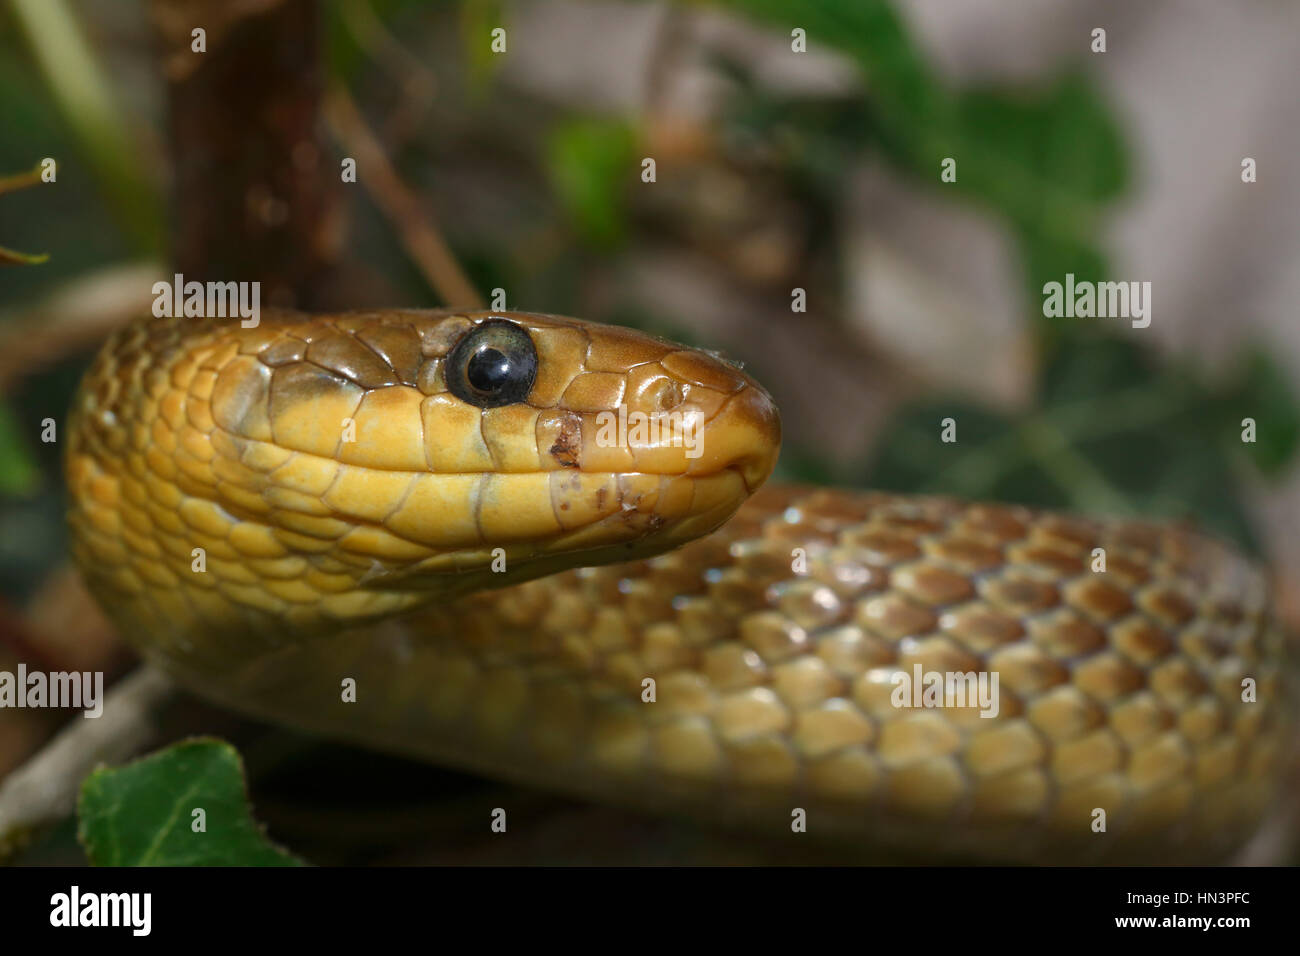 Zamenis longissimus Aesculapian snake (), Parc National du Haut Balaton, Balaton Felvidéki Nemzeti Park, le lac Balaton, Hongrie Banque D'Images